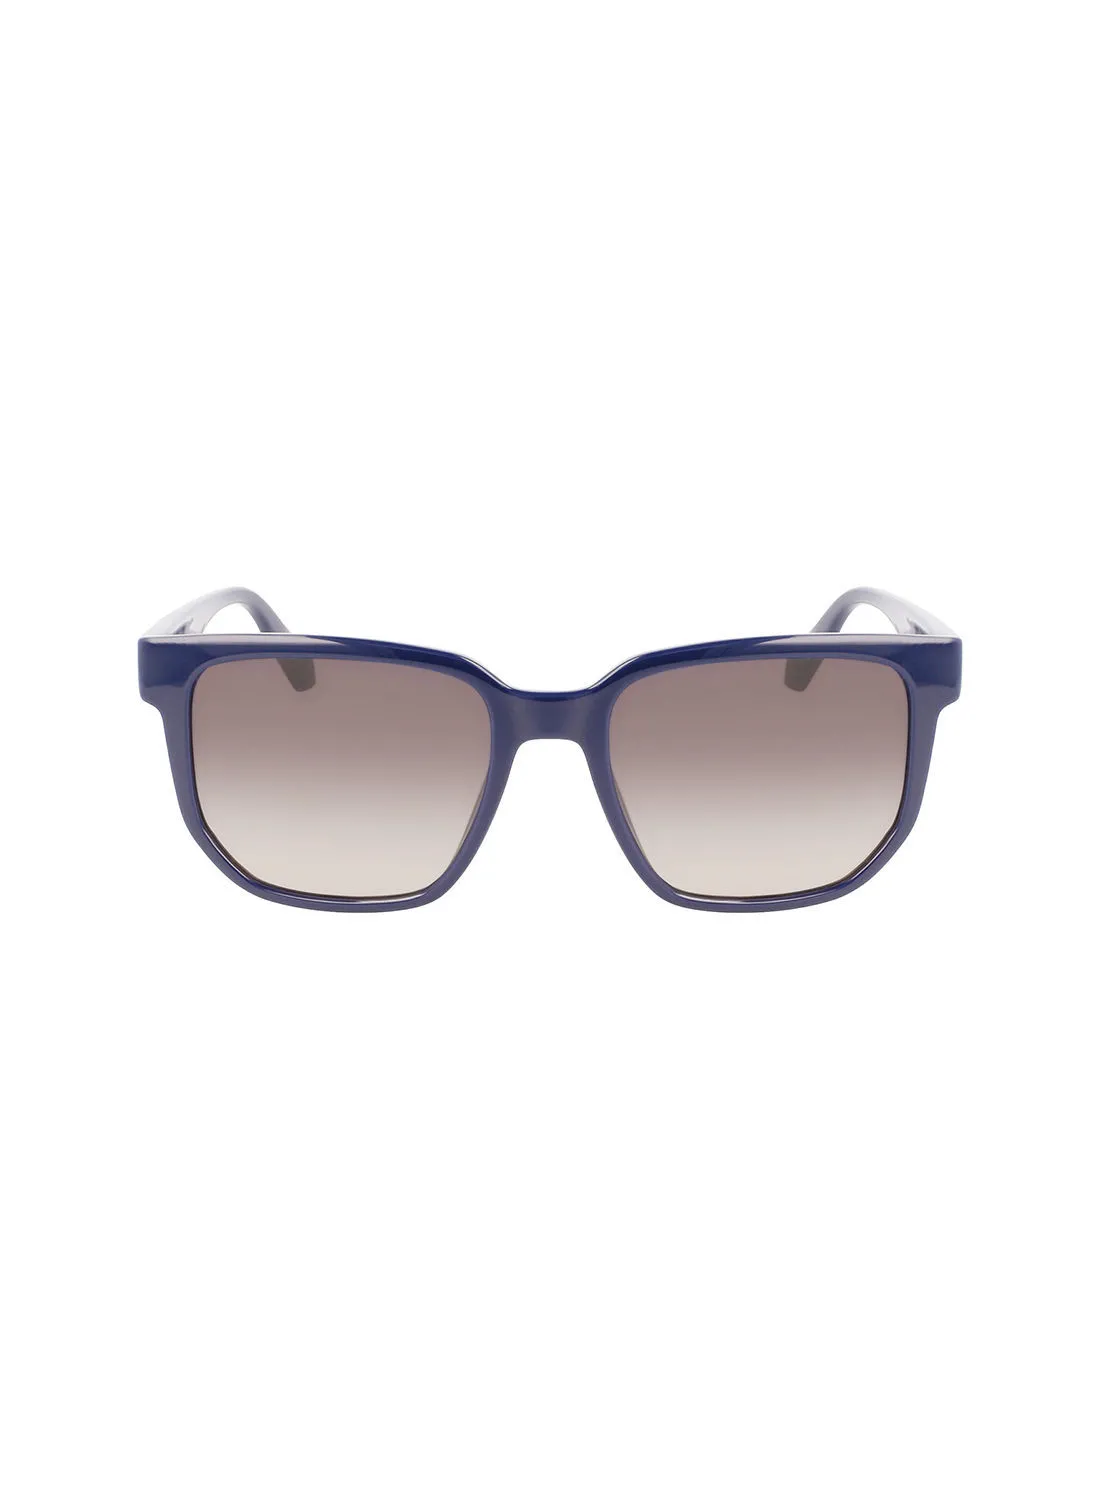 Calvin Klein Jeans UV Rays Protection Eyewear Sunglasses CKJ22611S-400-5519